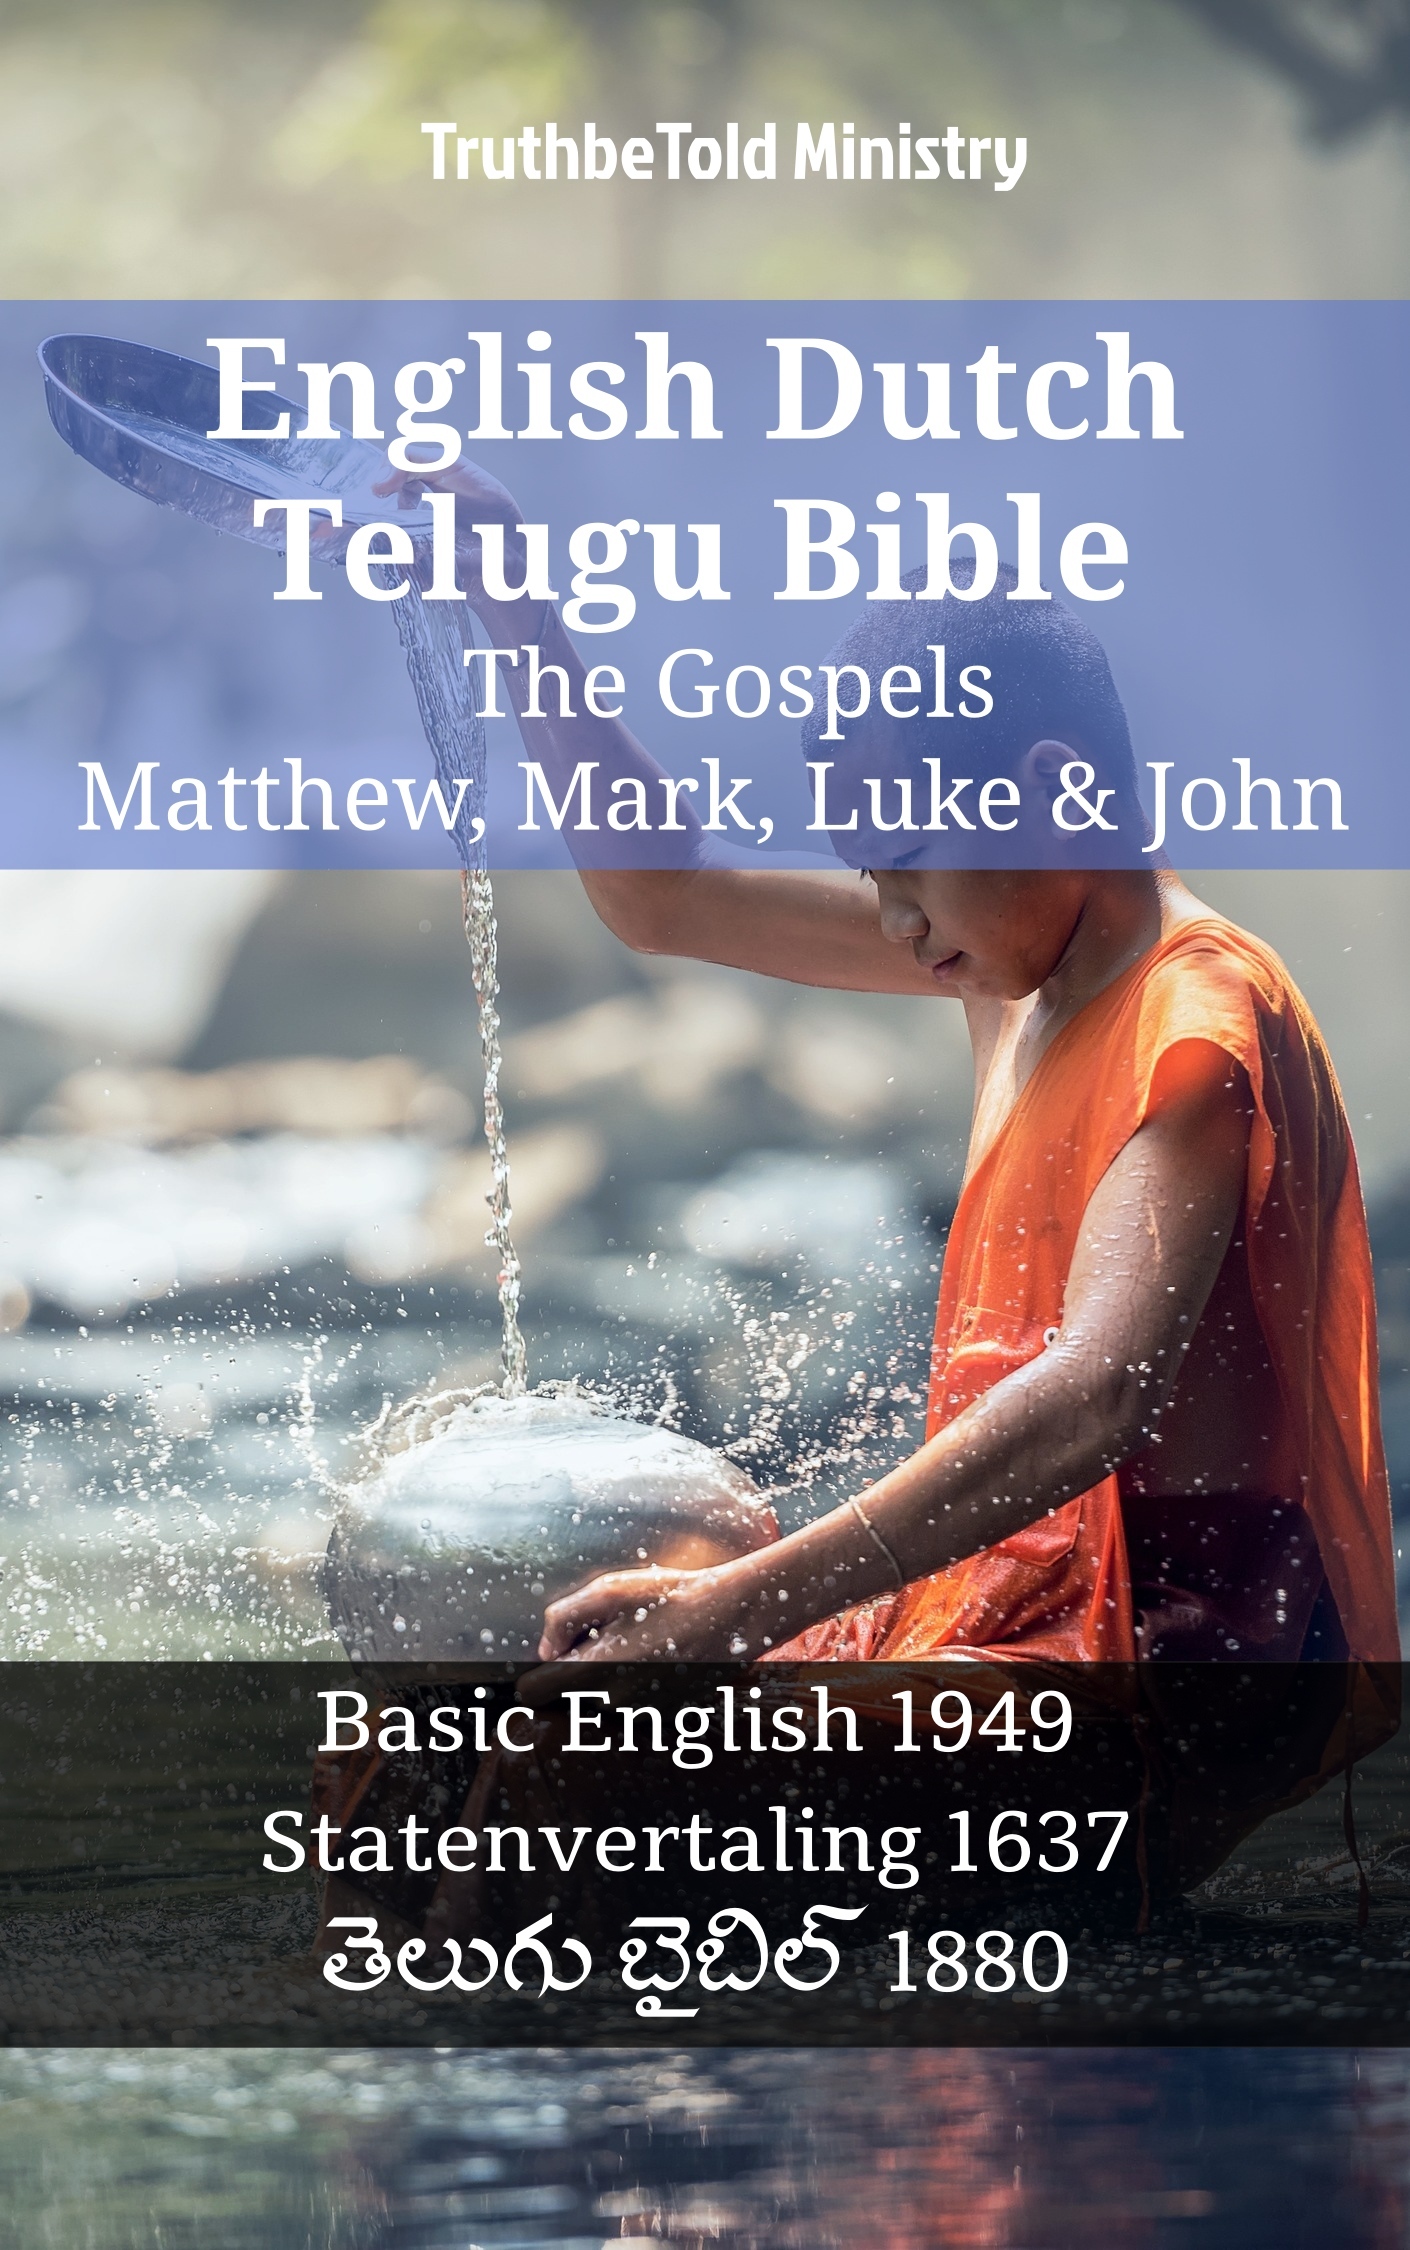 English Dutch Telugu Bible - The Gospels - Matthew, Mark, Luke & John